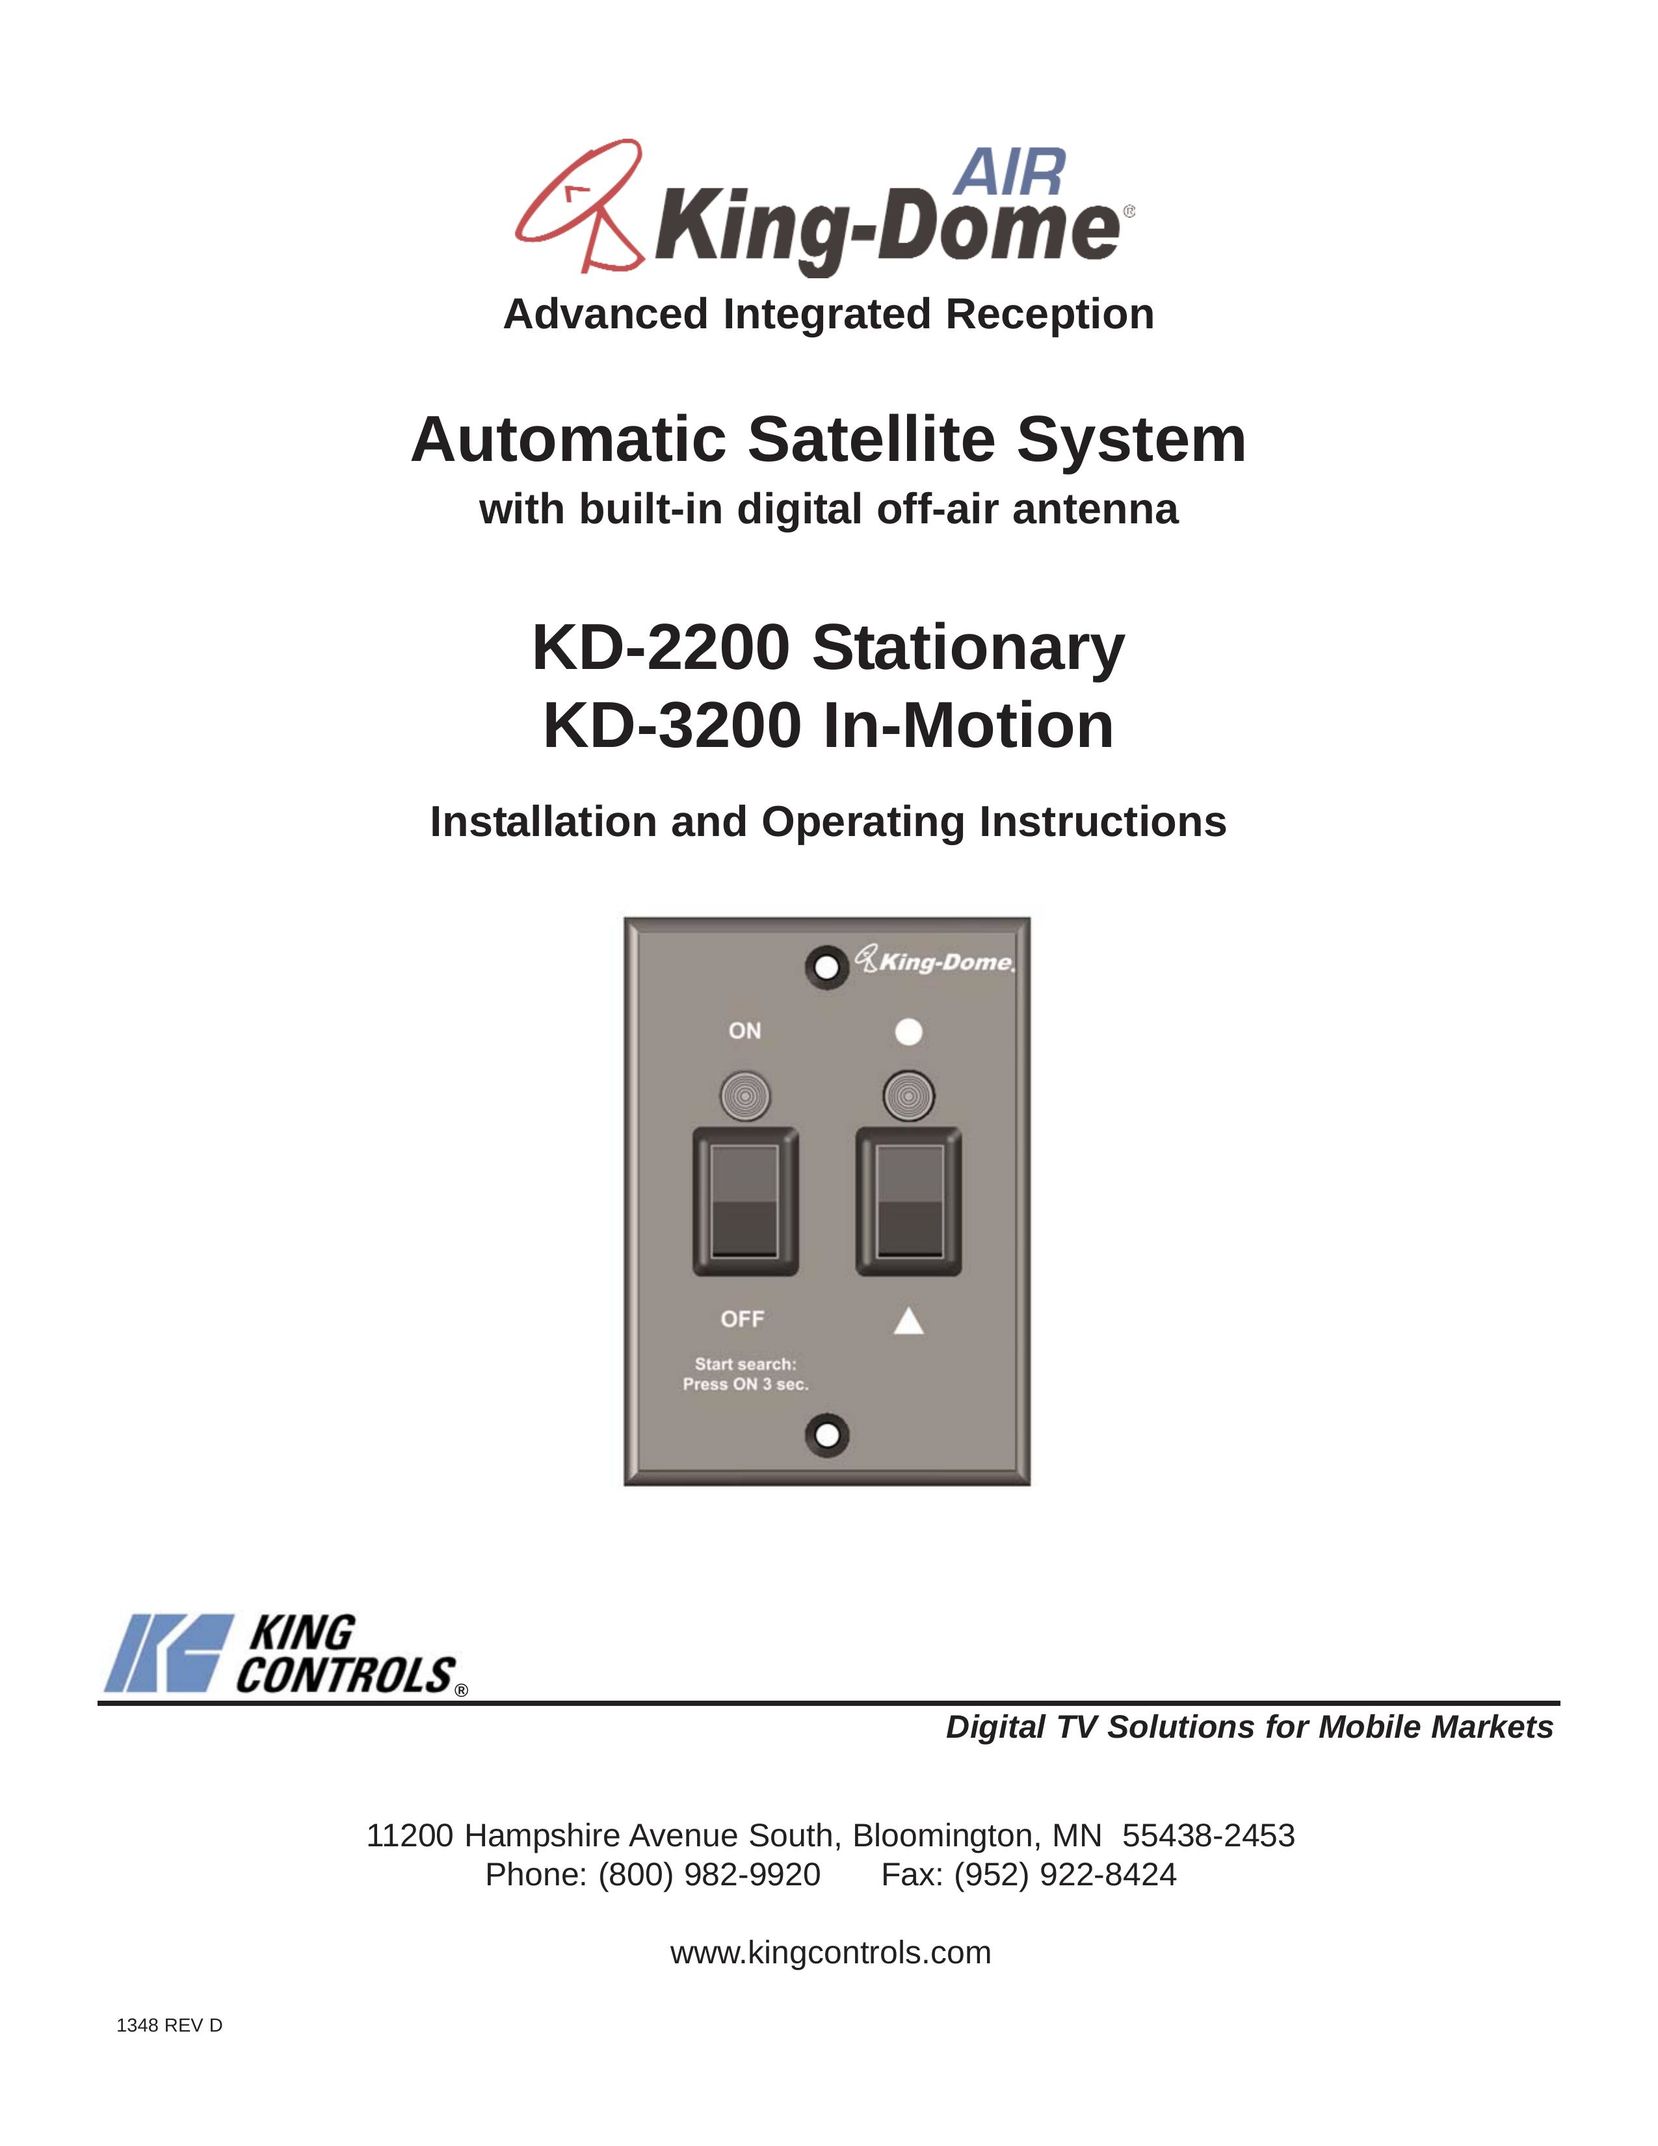 King Controls KD-2200 Satellite TV System User Manual